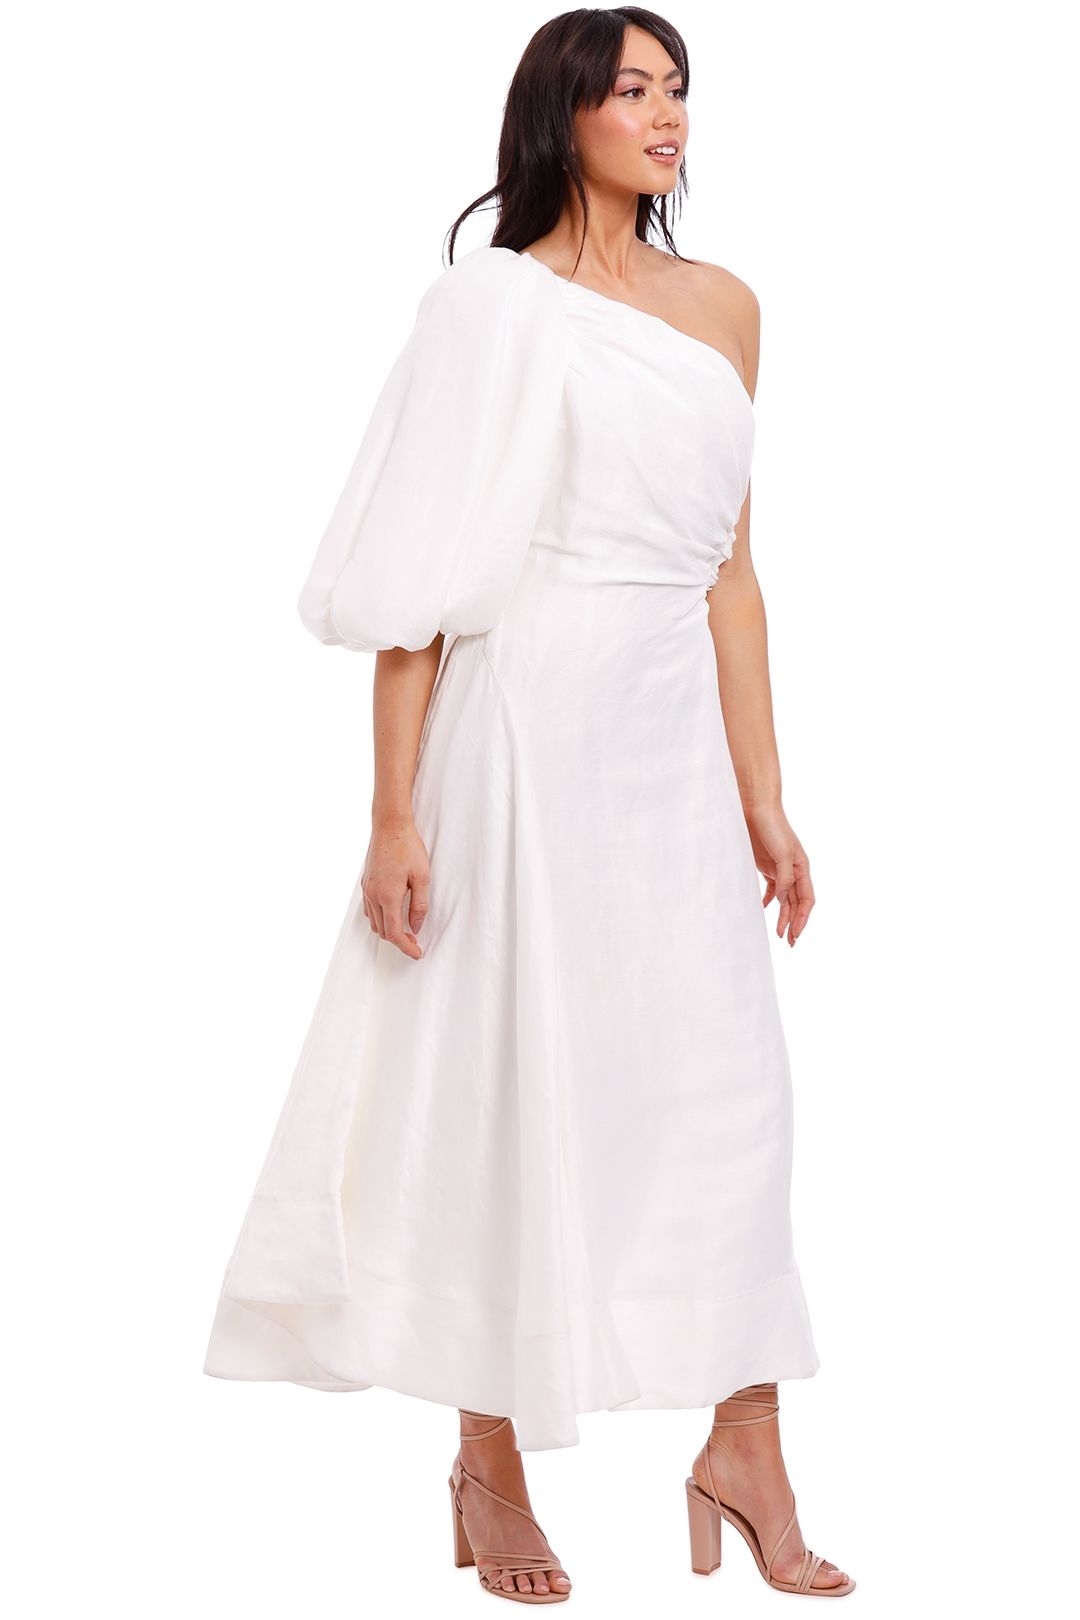 AJE Concept Dress White One Shoulder